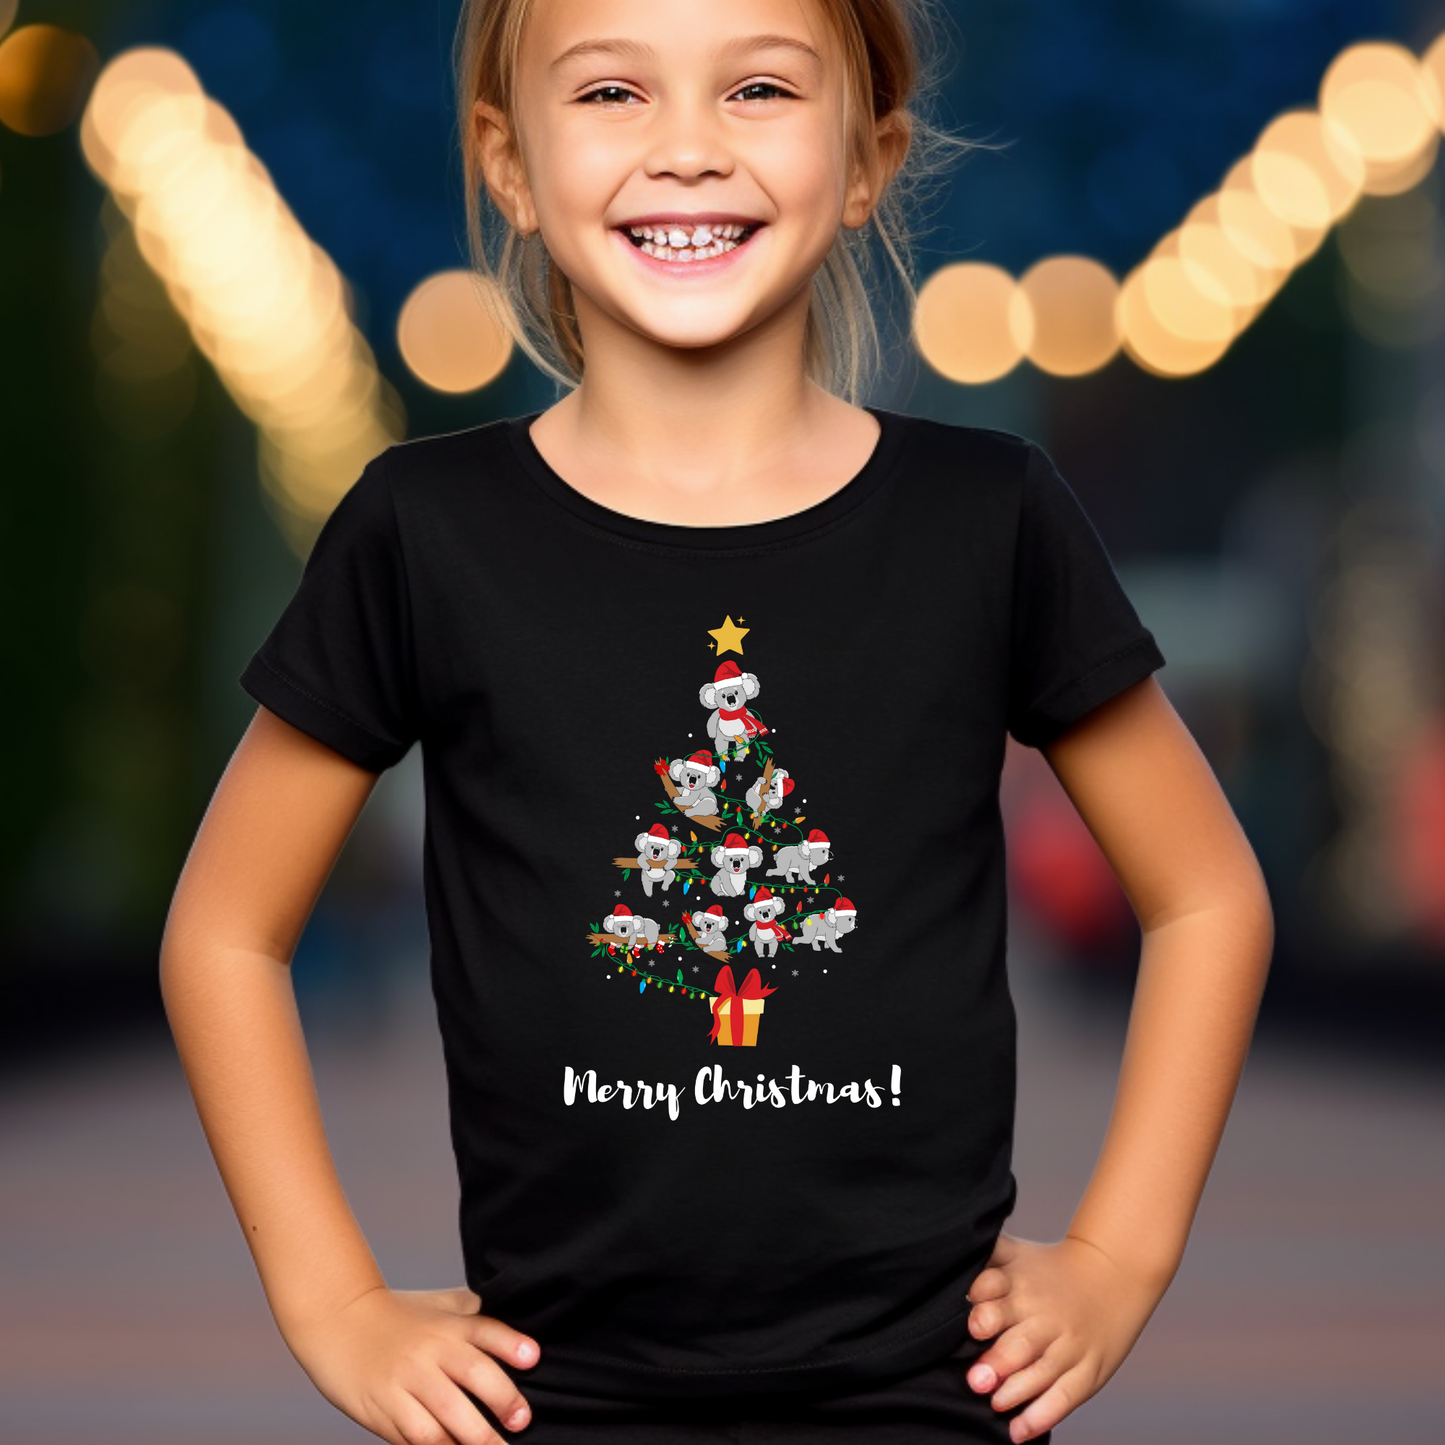 Kids Koala Christmas Tree T-shirt | Unisex Sizes